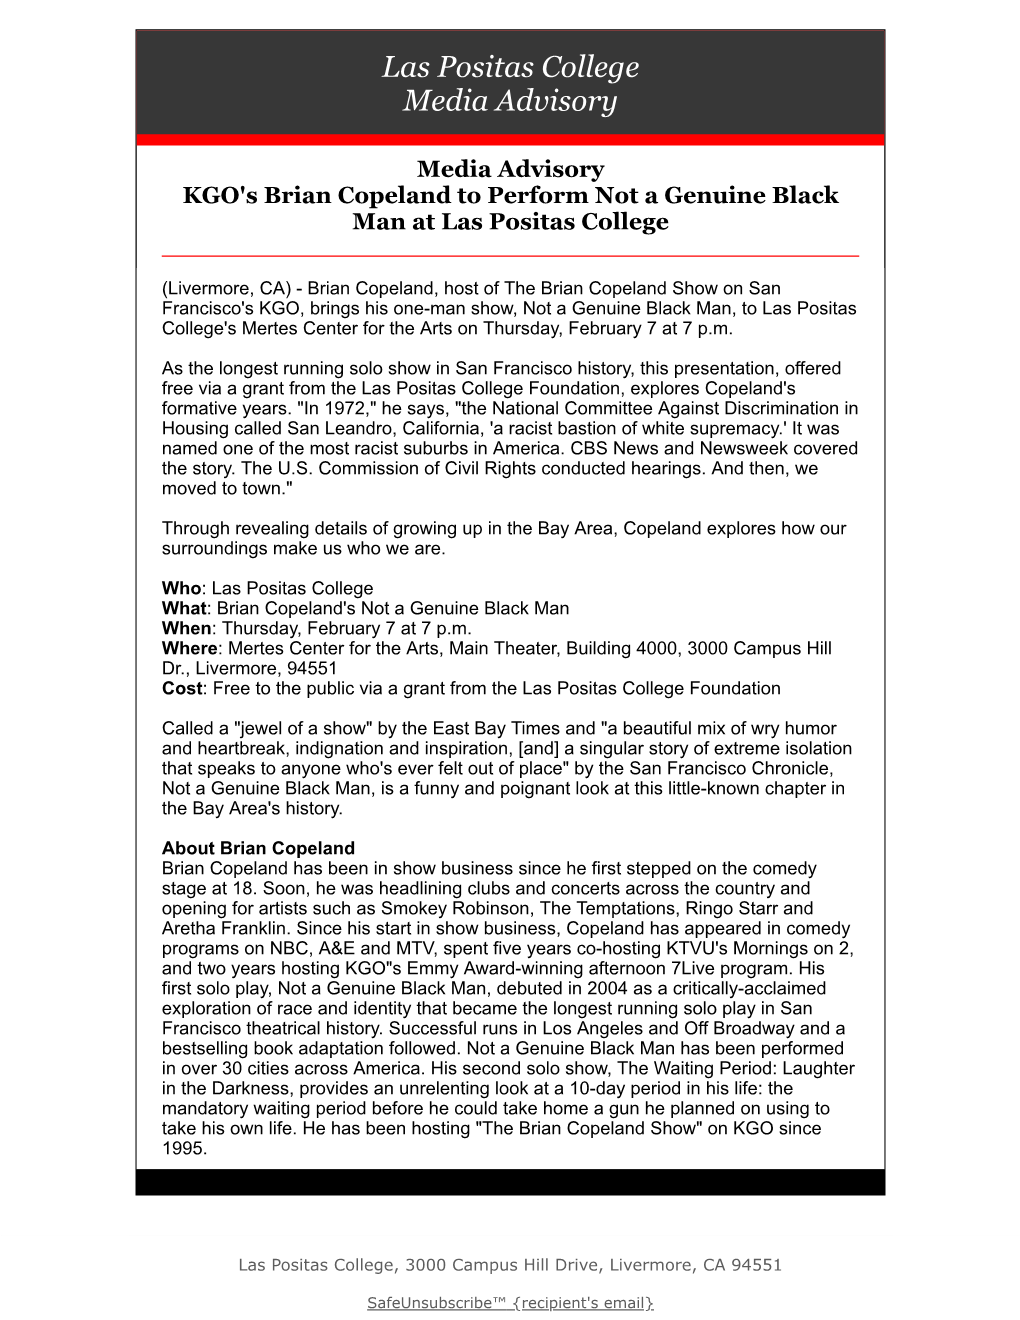 KGO's Brian Copeland to Perform Not a Genuine Black Man at Las Positas College